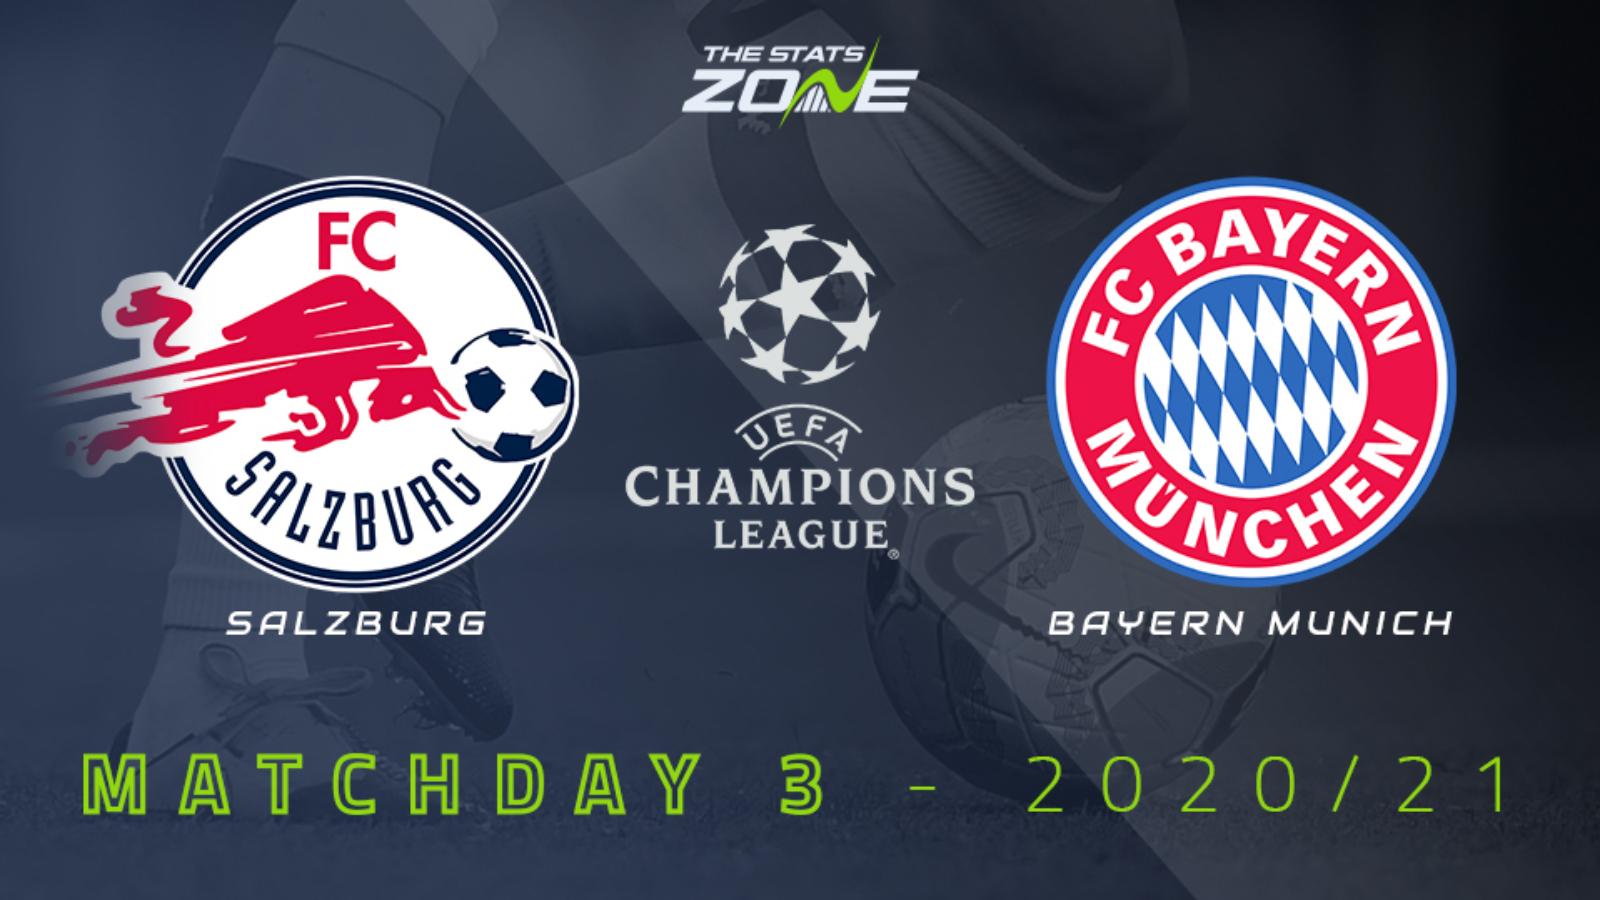 2020 21 Uefa Champions League Salzburg Vs Bayern Munich Preview Prediction The Stats Zone